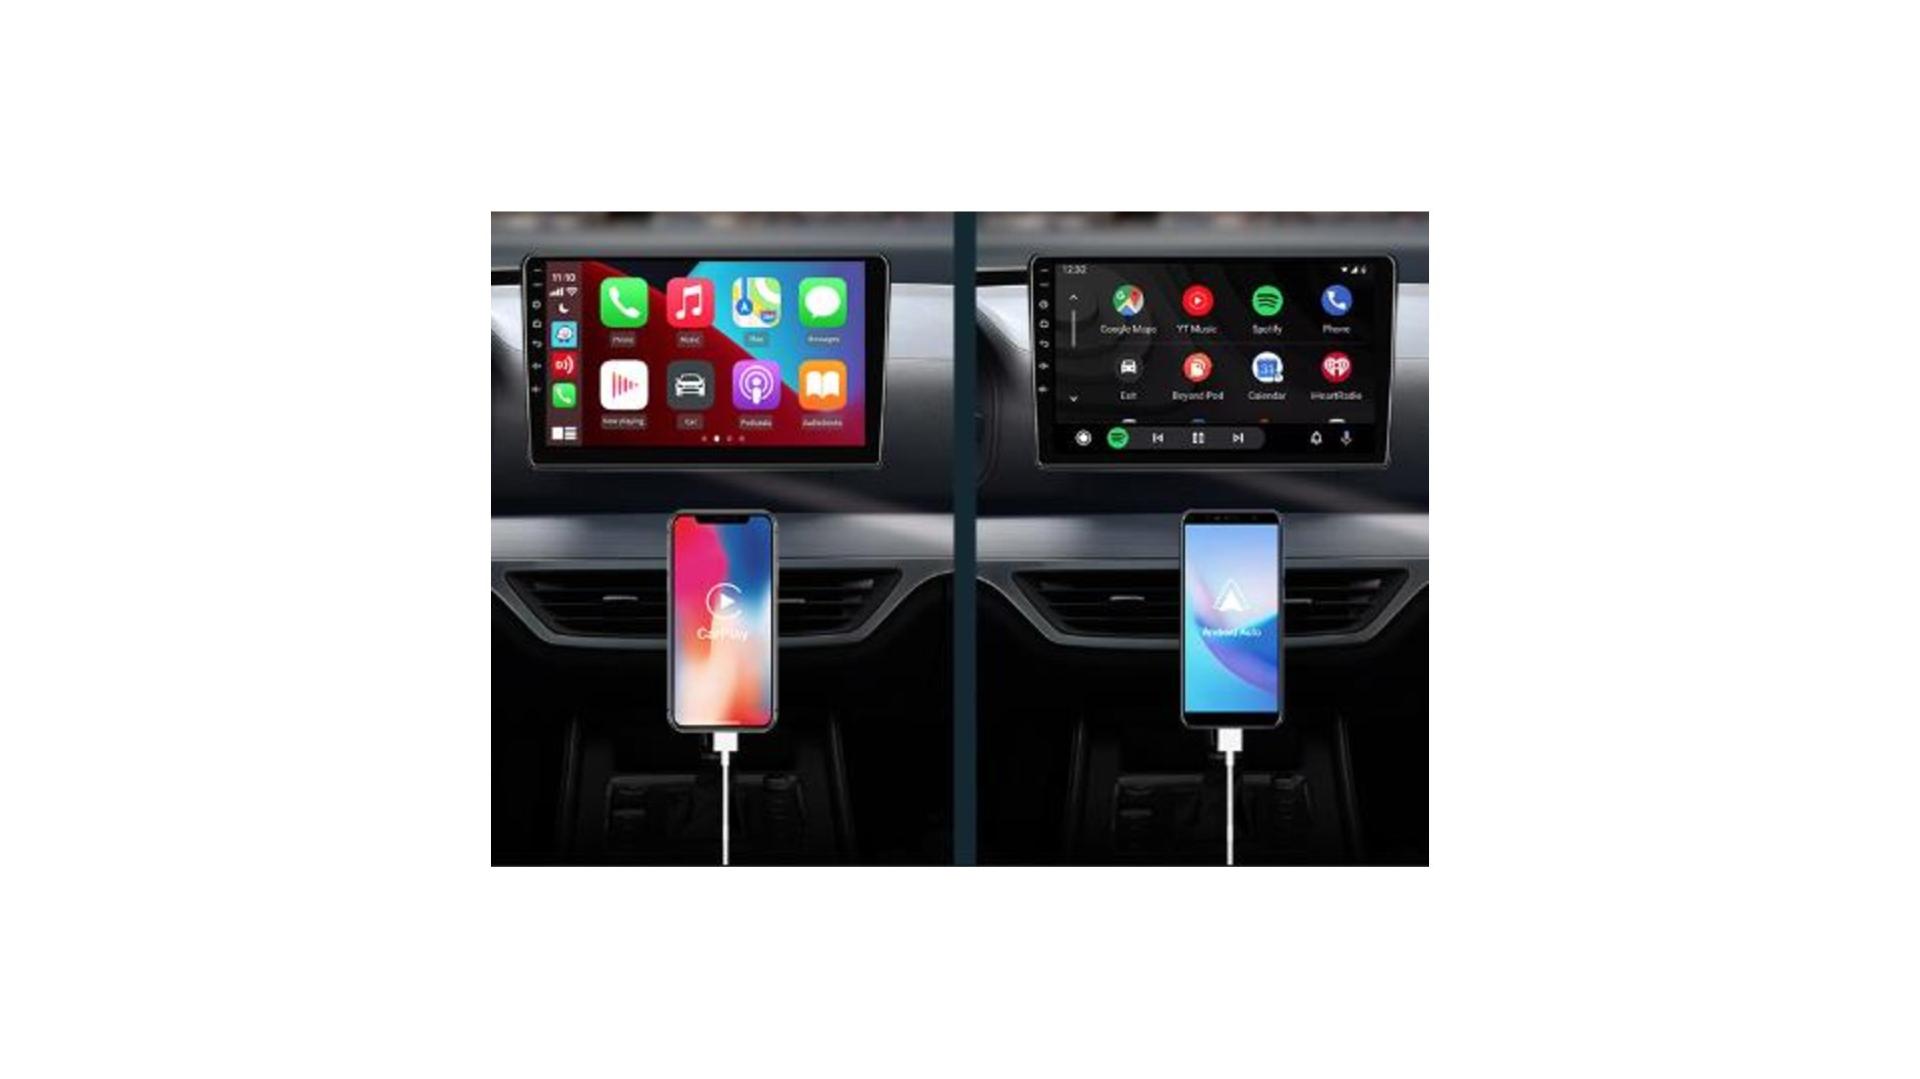 Iphone Apple CARPLAY sans fil & Android AUTO pour autoradio android